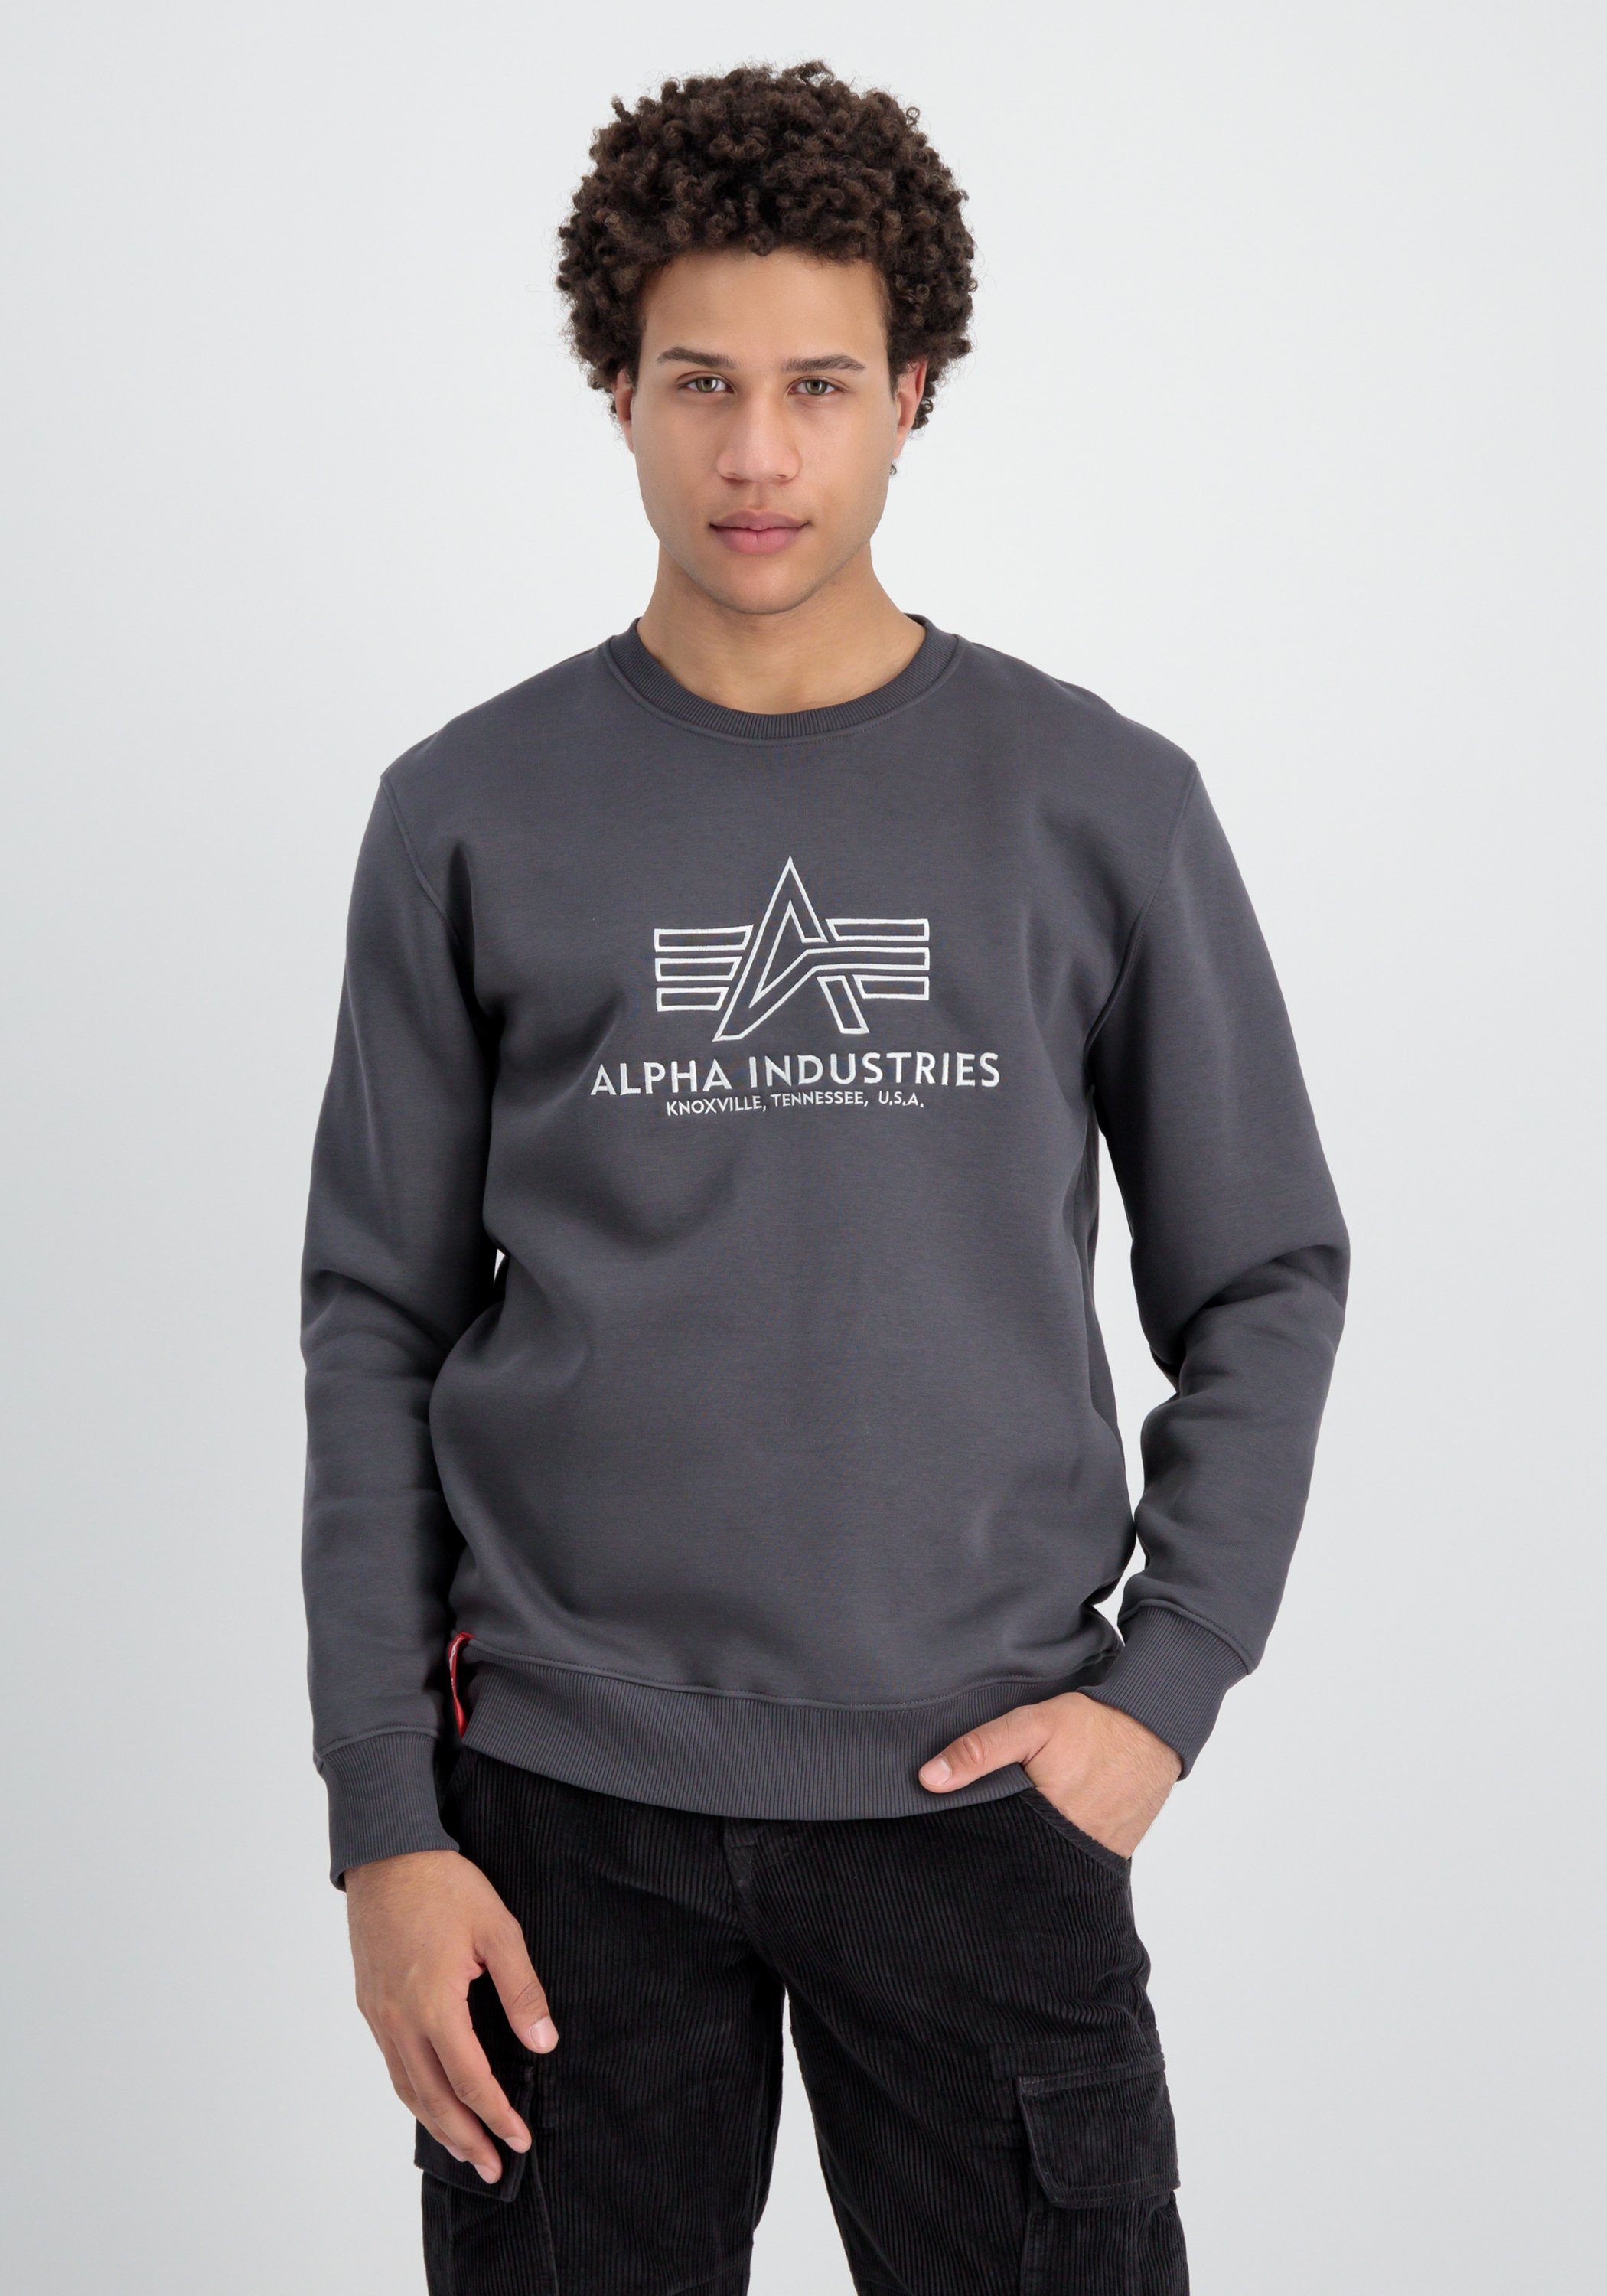 Alpha Industries Sweater Basic Industries Embroidery Men Sweatshirts - grey Alpha Sweater vintage